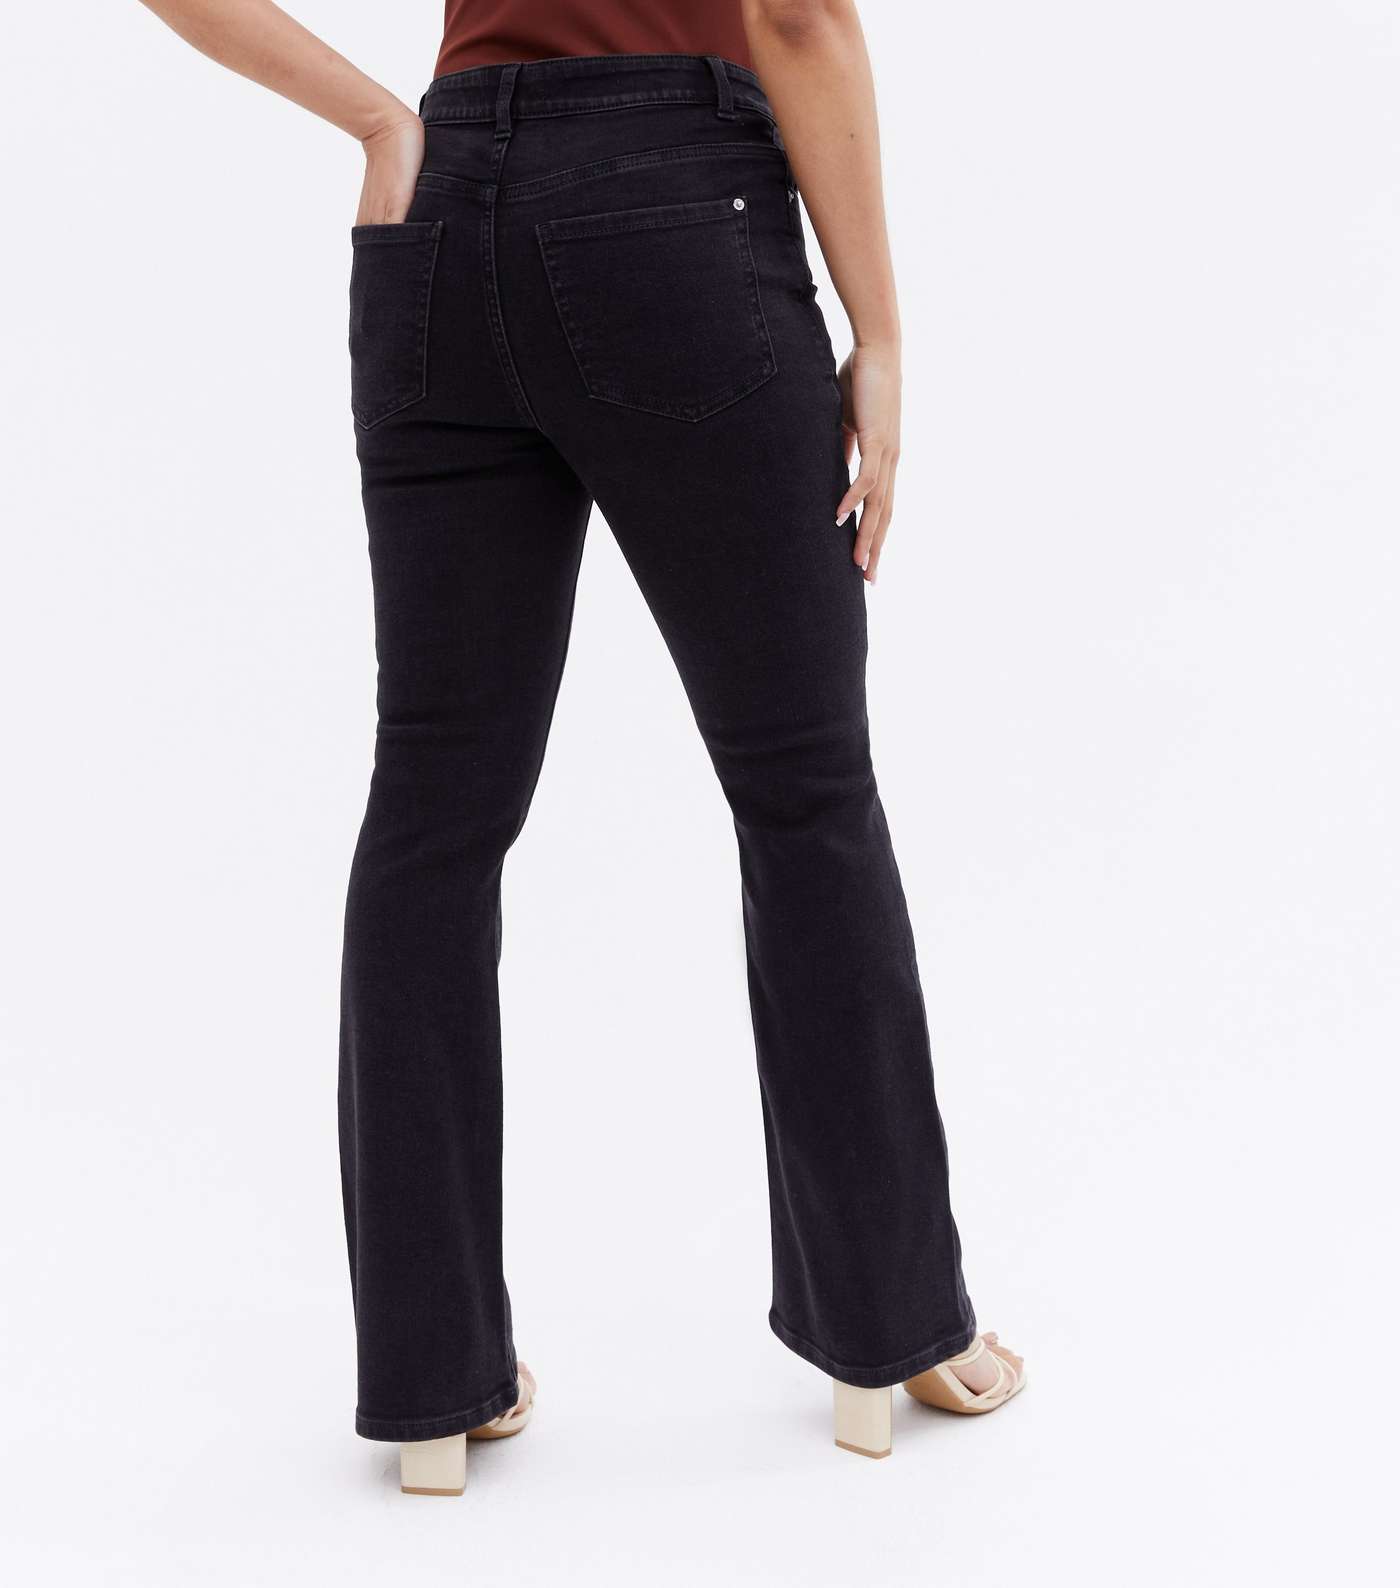 Petite Black Waist Enhance Quinn Bootcut Jeans Image 4